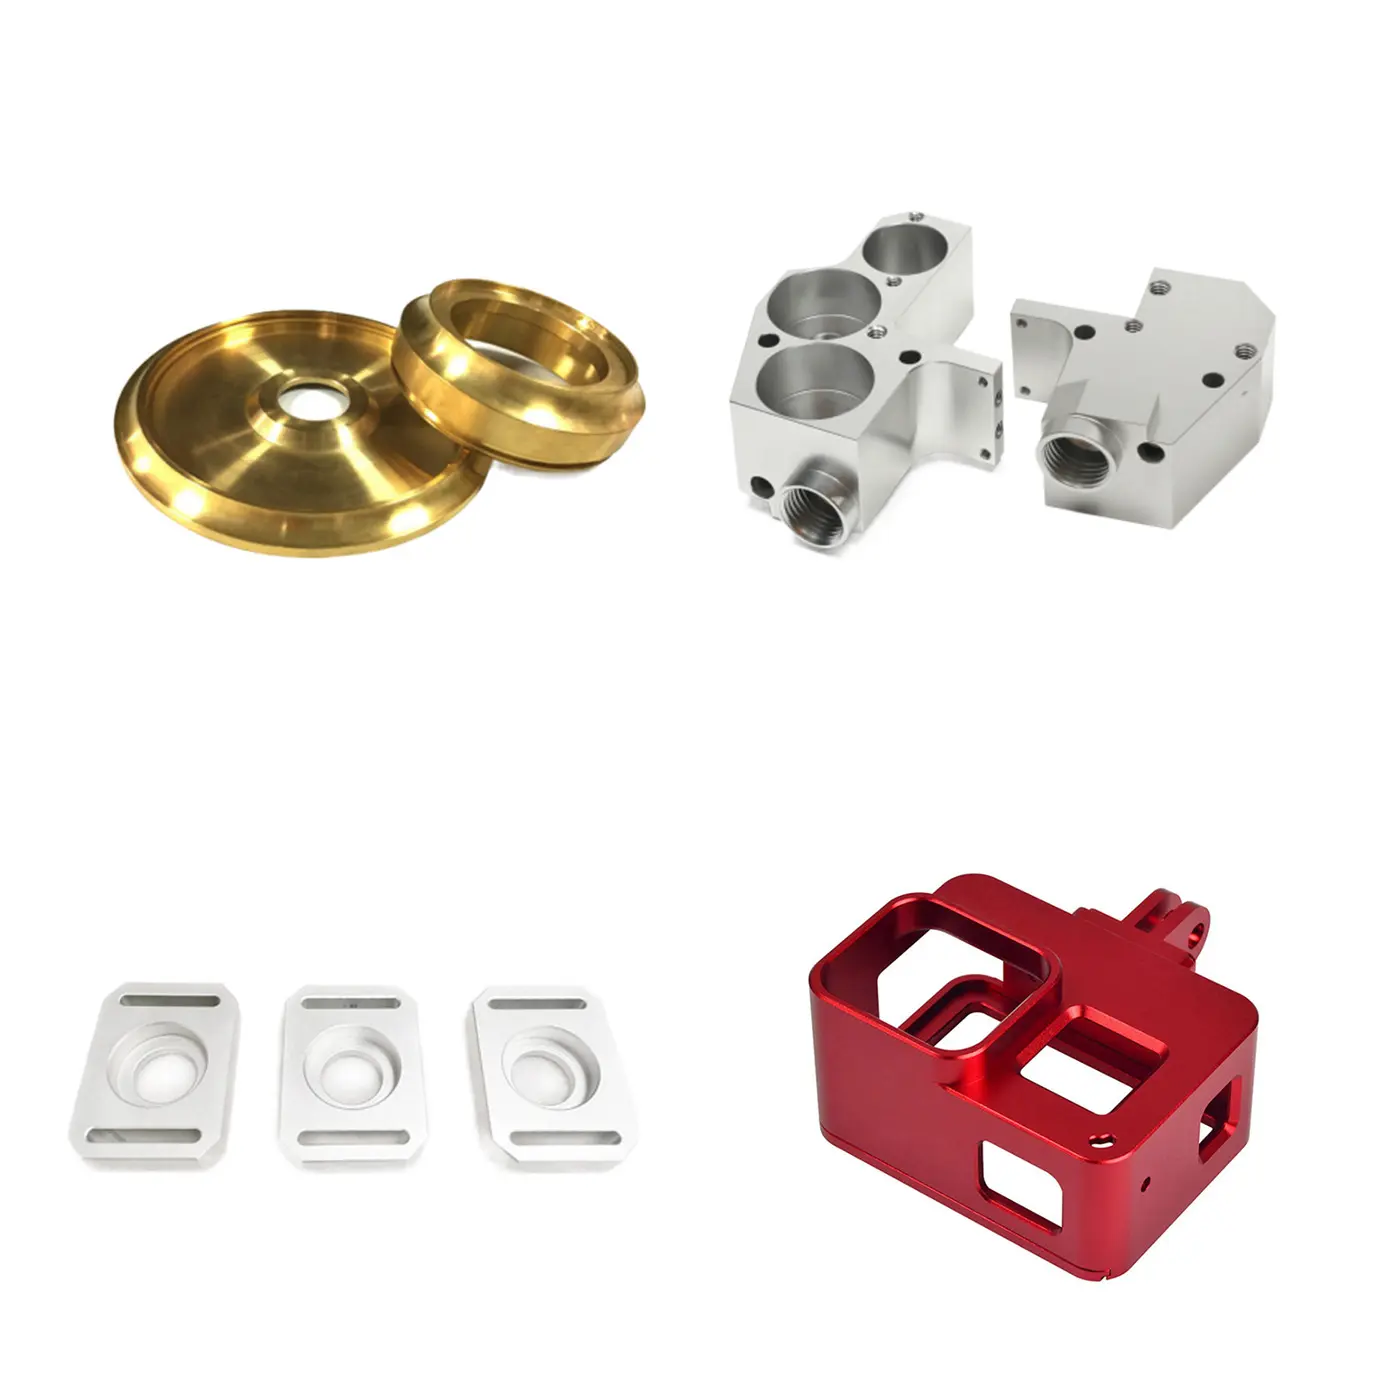 Präzise kunden spezifische Aluminium teile mechanische Produkte Metall CNC Bearbeitungs teile Service